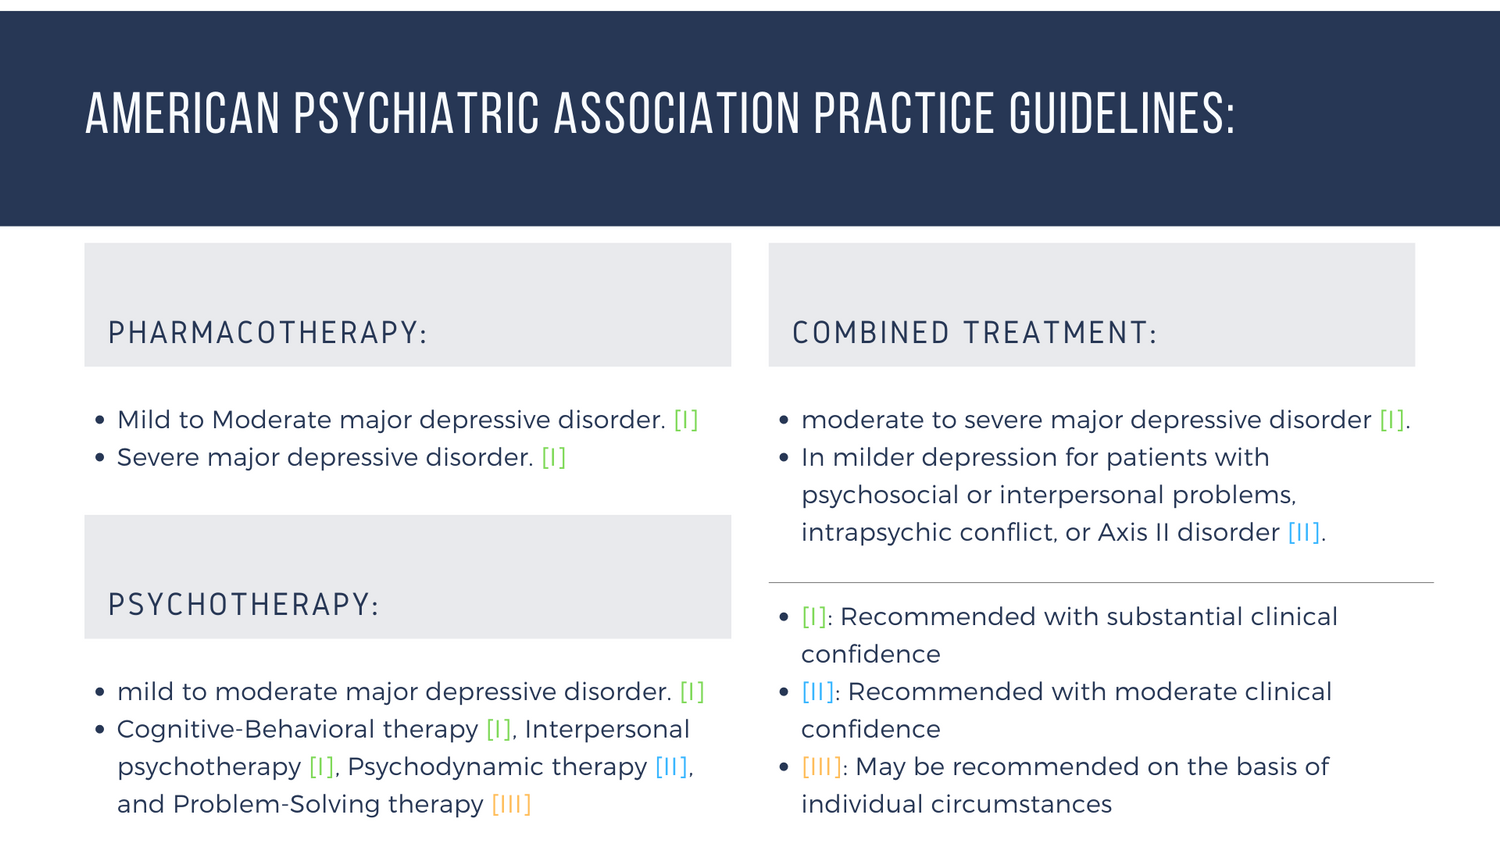 American Psychiatric Association (APA) Practice Guidelines